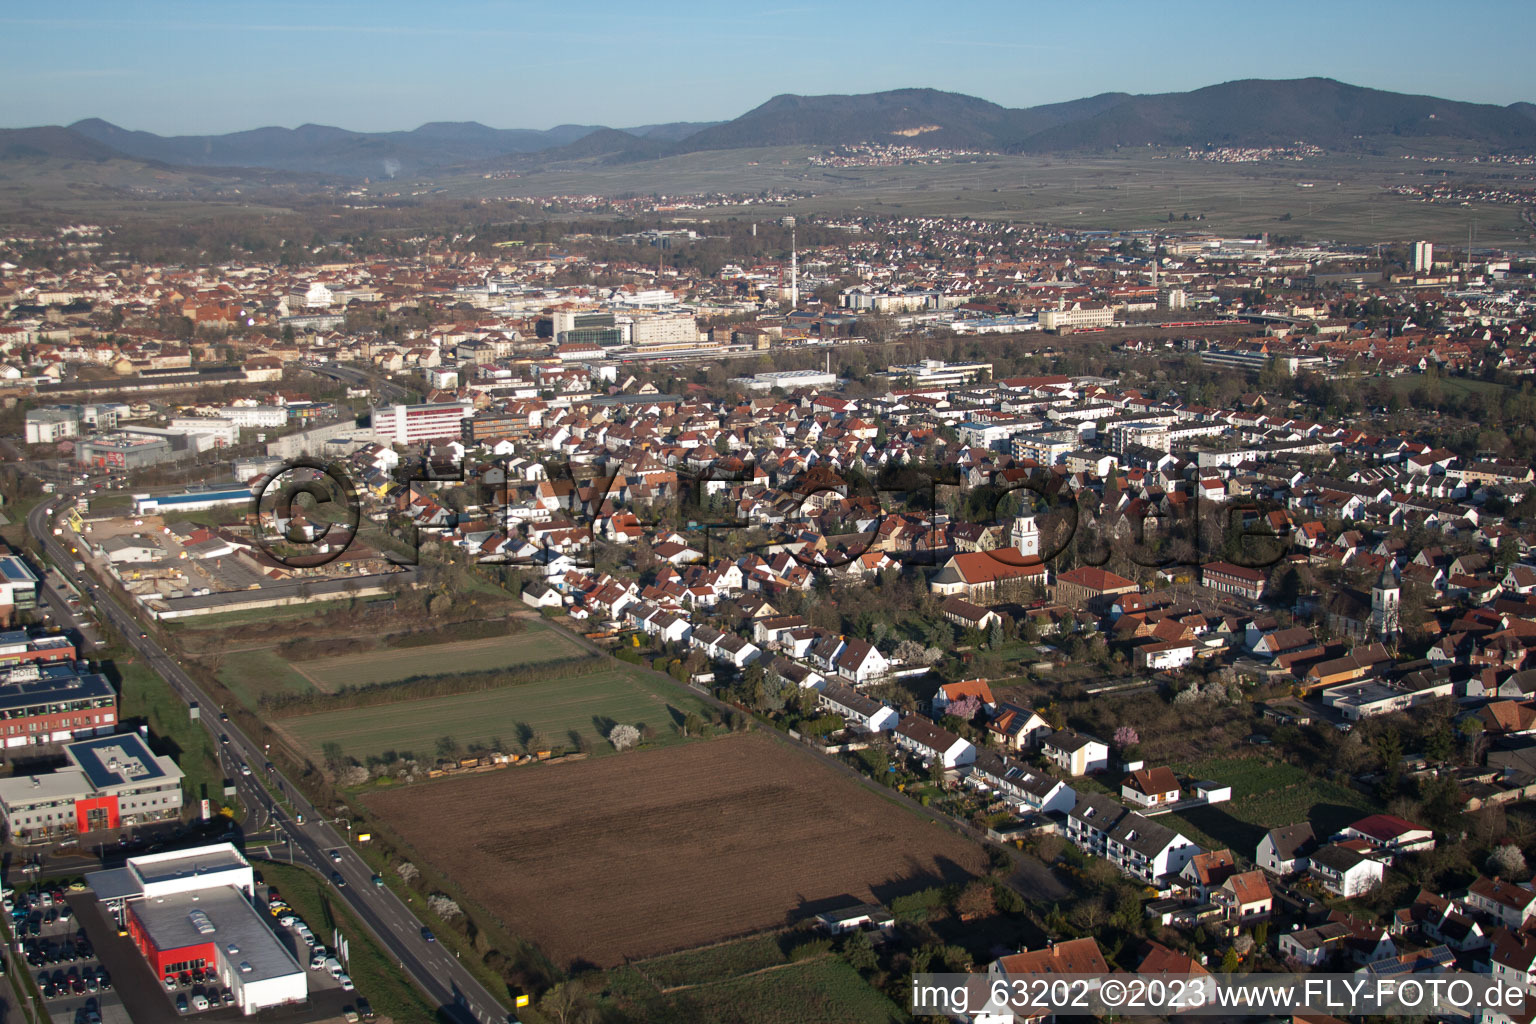 Drone recording of District Queichheim in Landau in der Pfalz in the state Rhineland-Palatinate, Germany